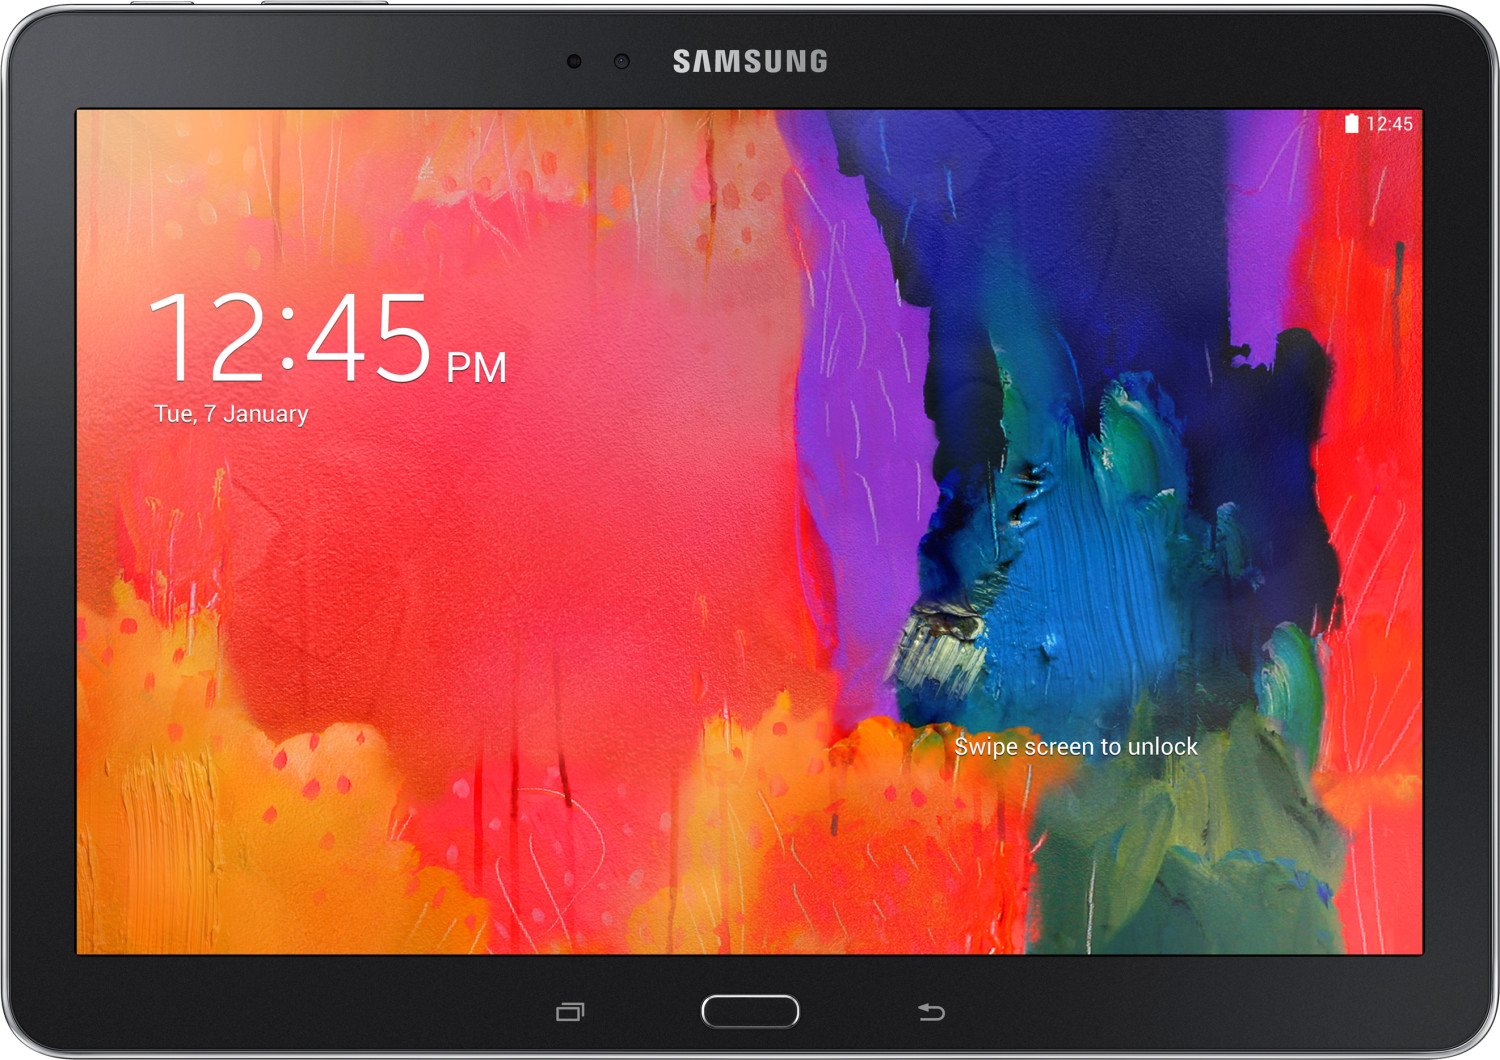 Samsung Galaxy Tab Pro 10.1 16GB WiFi schwarz